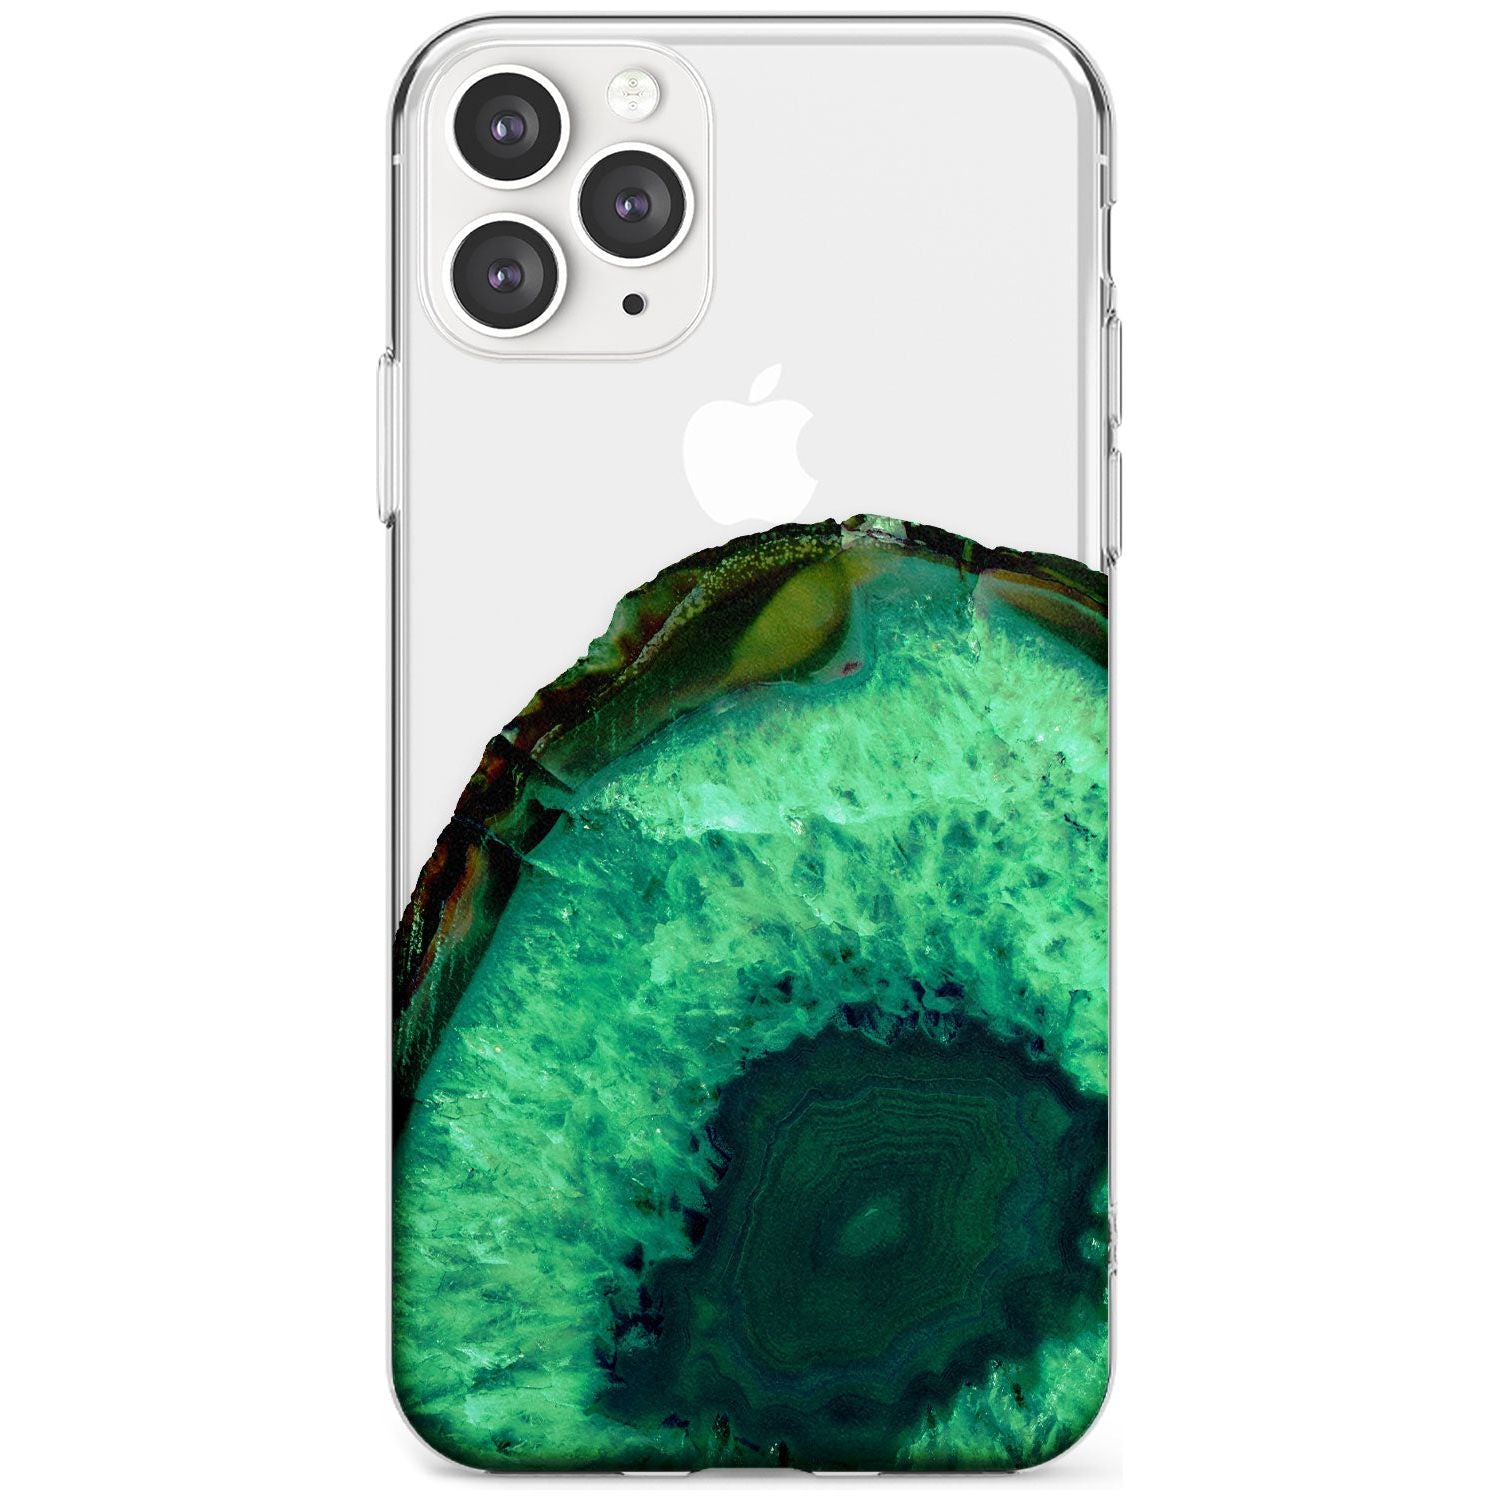 Emerald Green Gemstone Crystal Clear Design Slim TPU Phone Case for iPhone 11 Pro Max